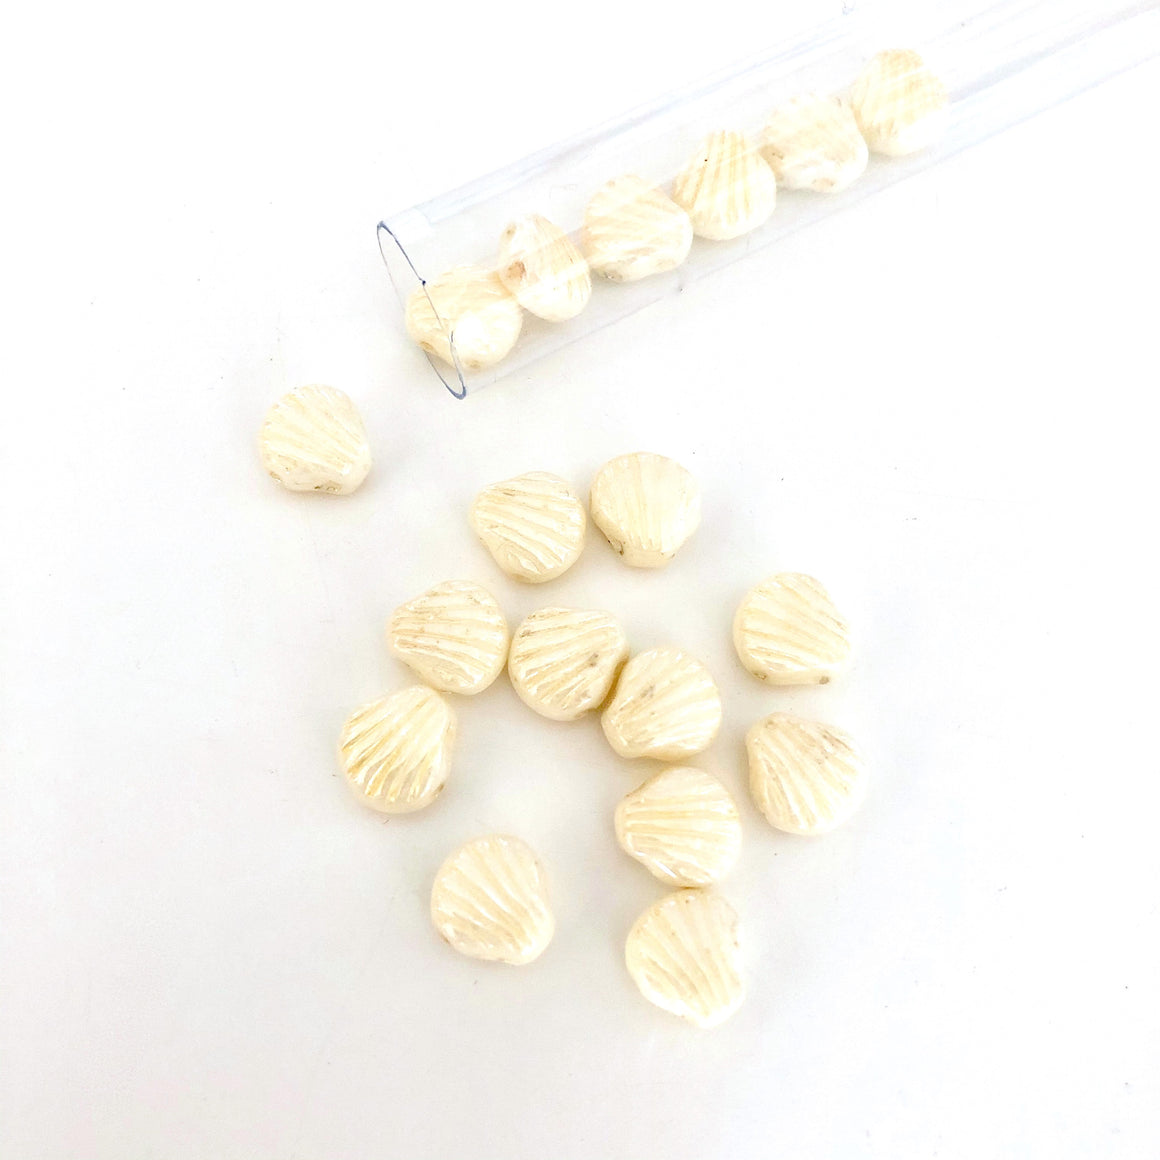 Shelly Shell Beads - Chalk White Shimmer